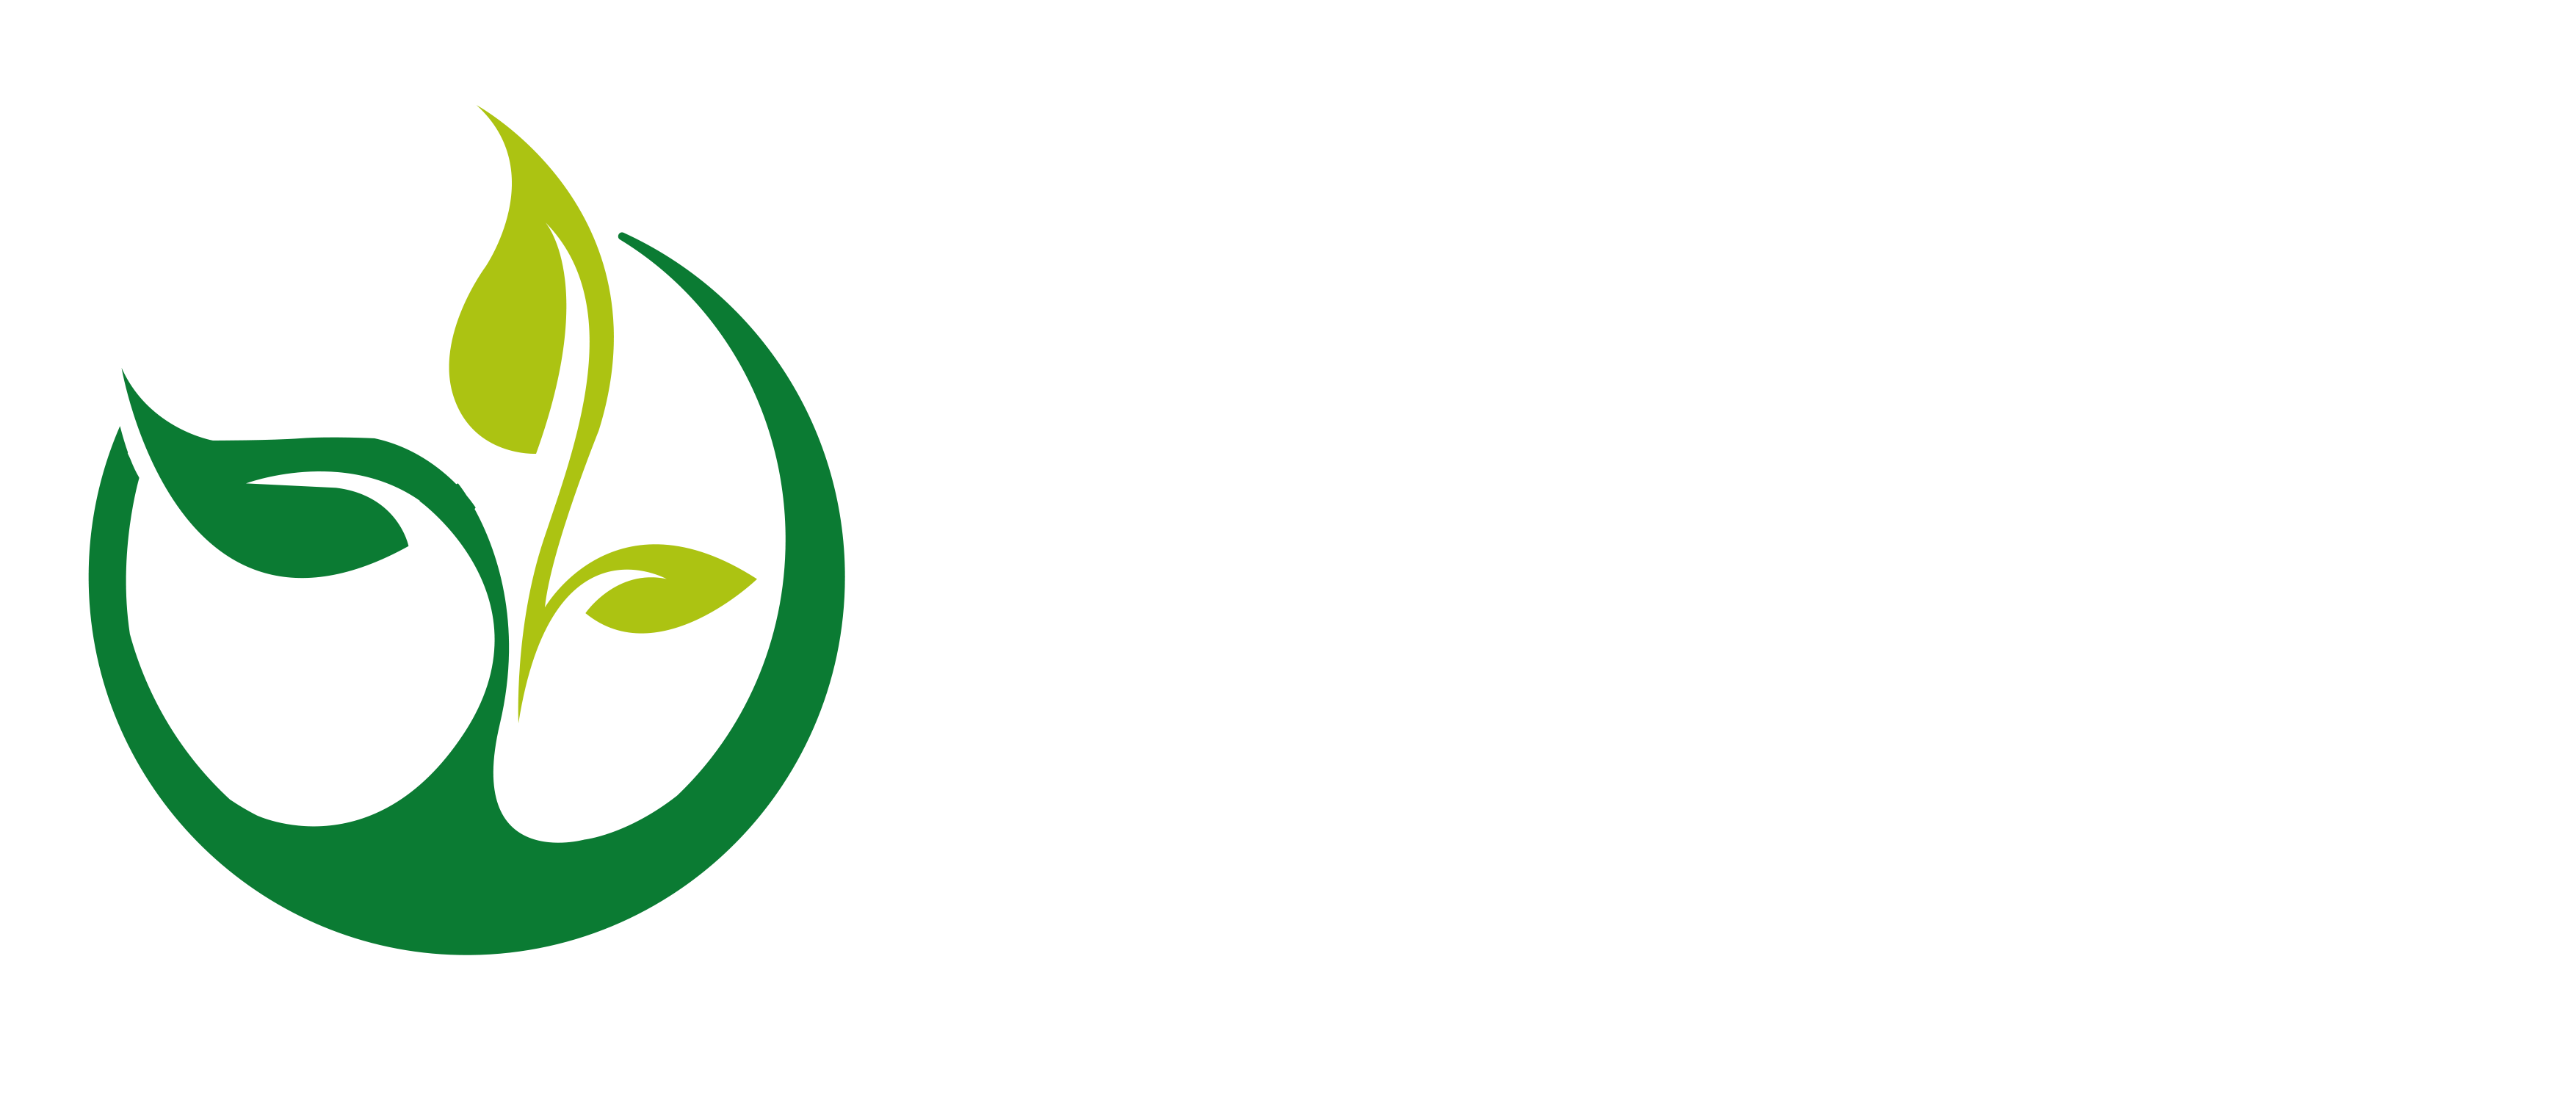 Pure Grow Africa